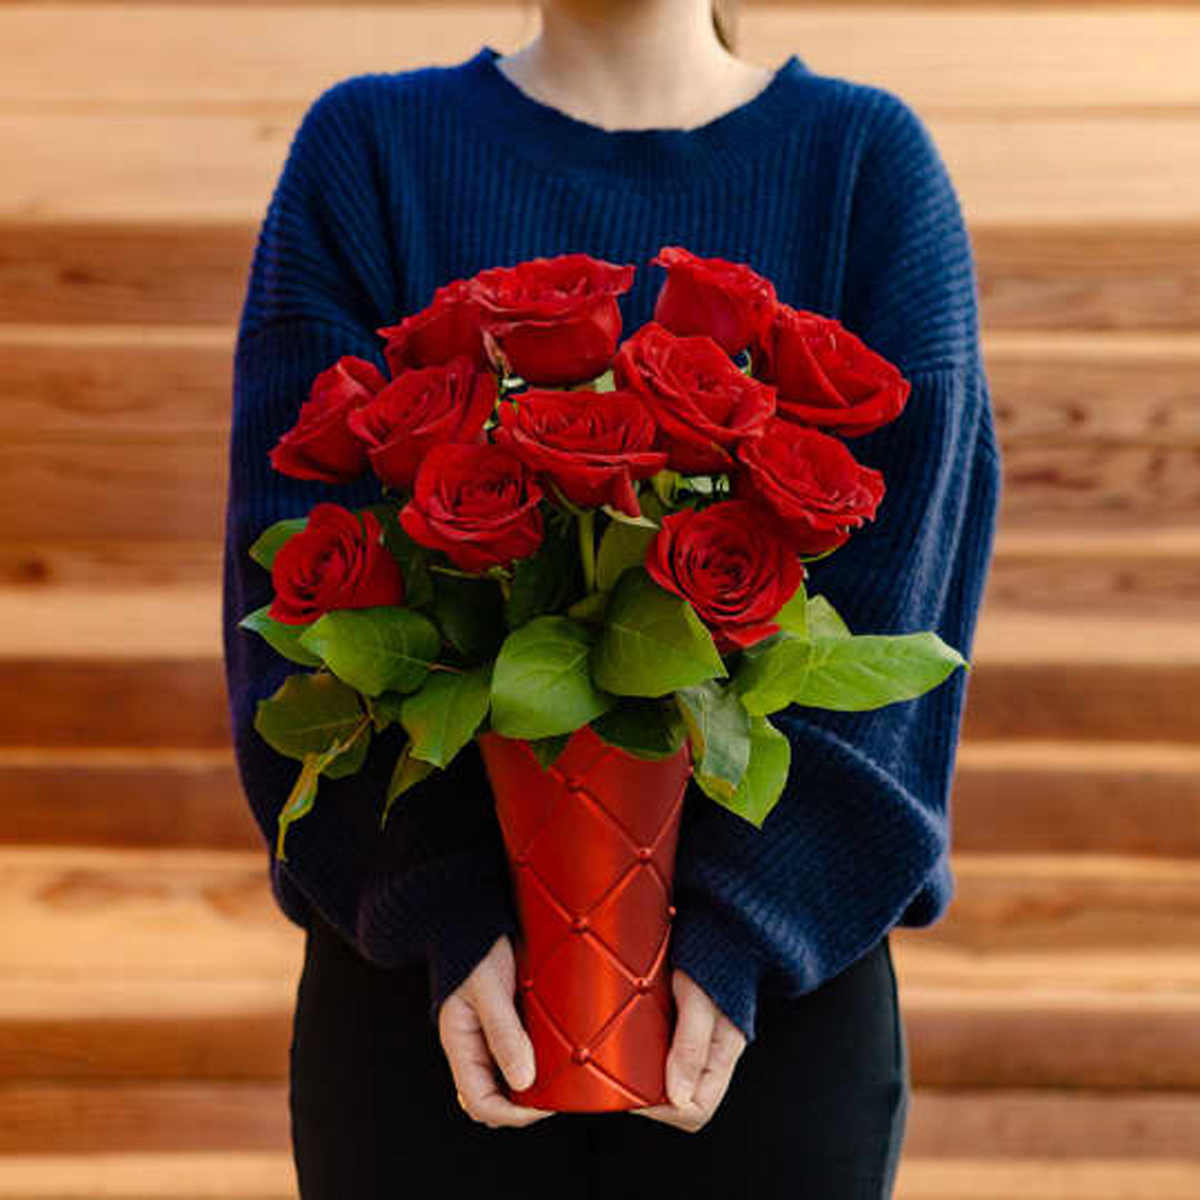 Top Floral Arrangements For Valentine’s Day